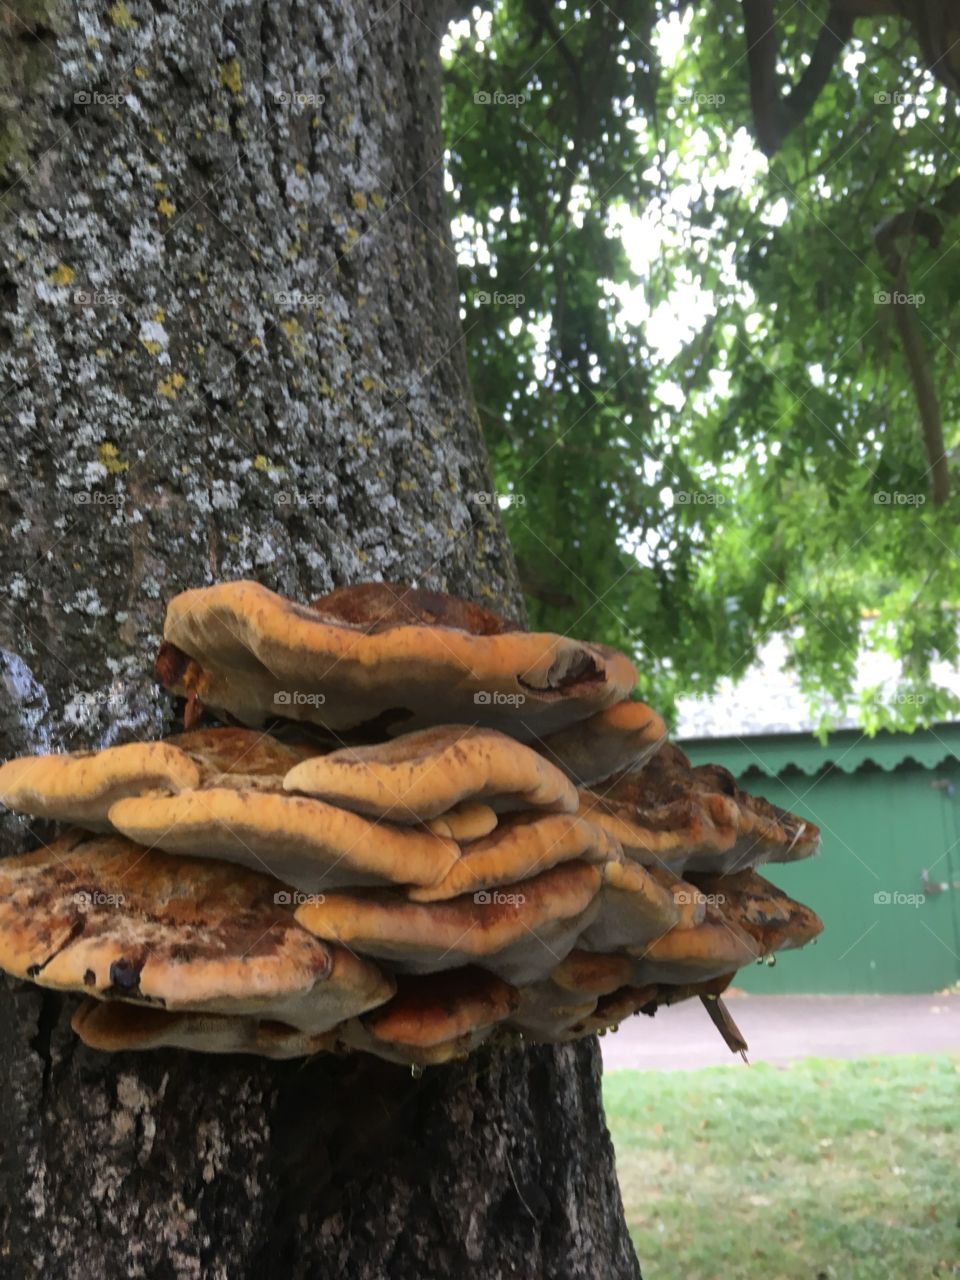 Mushrooms growing up a tree